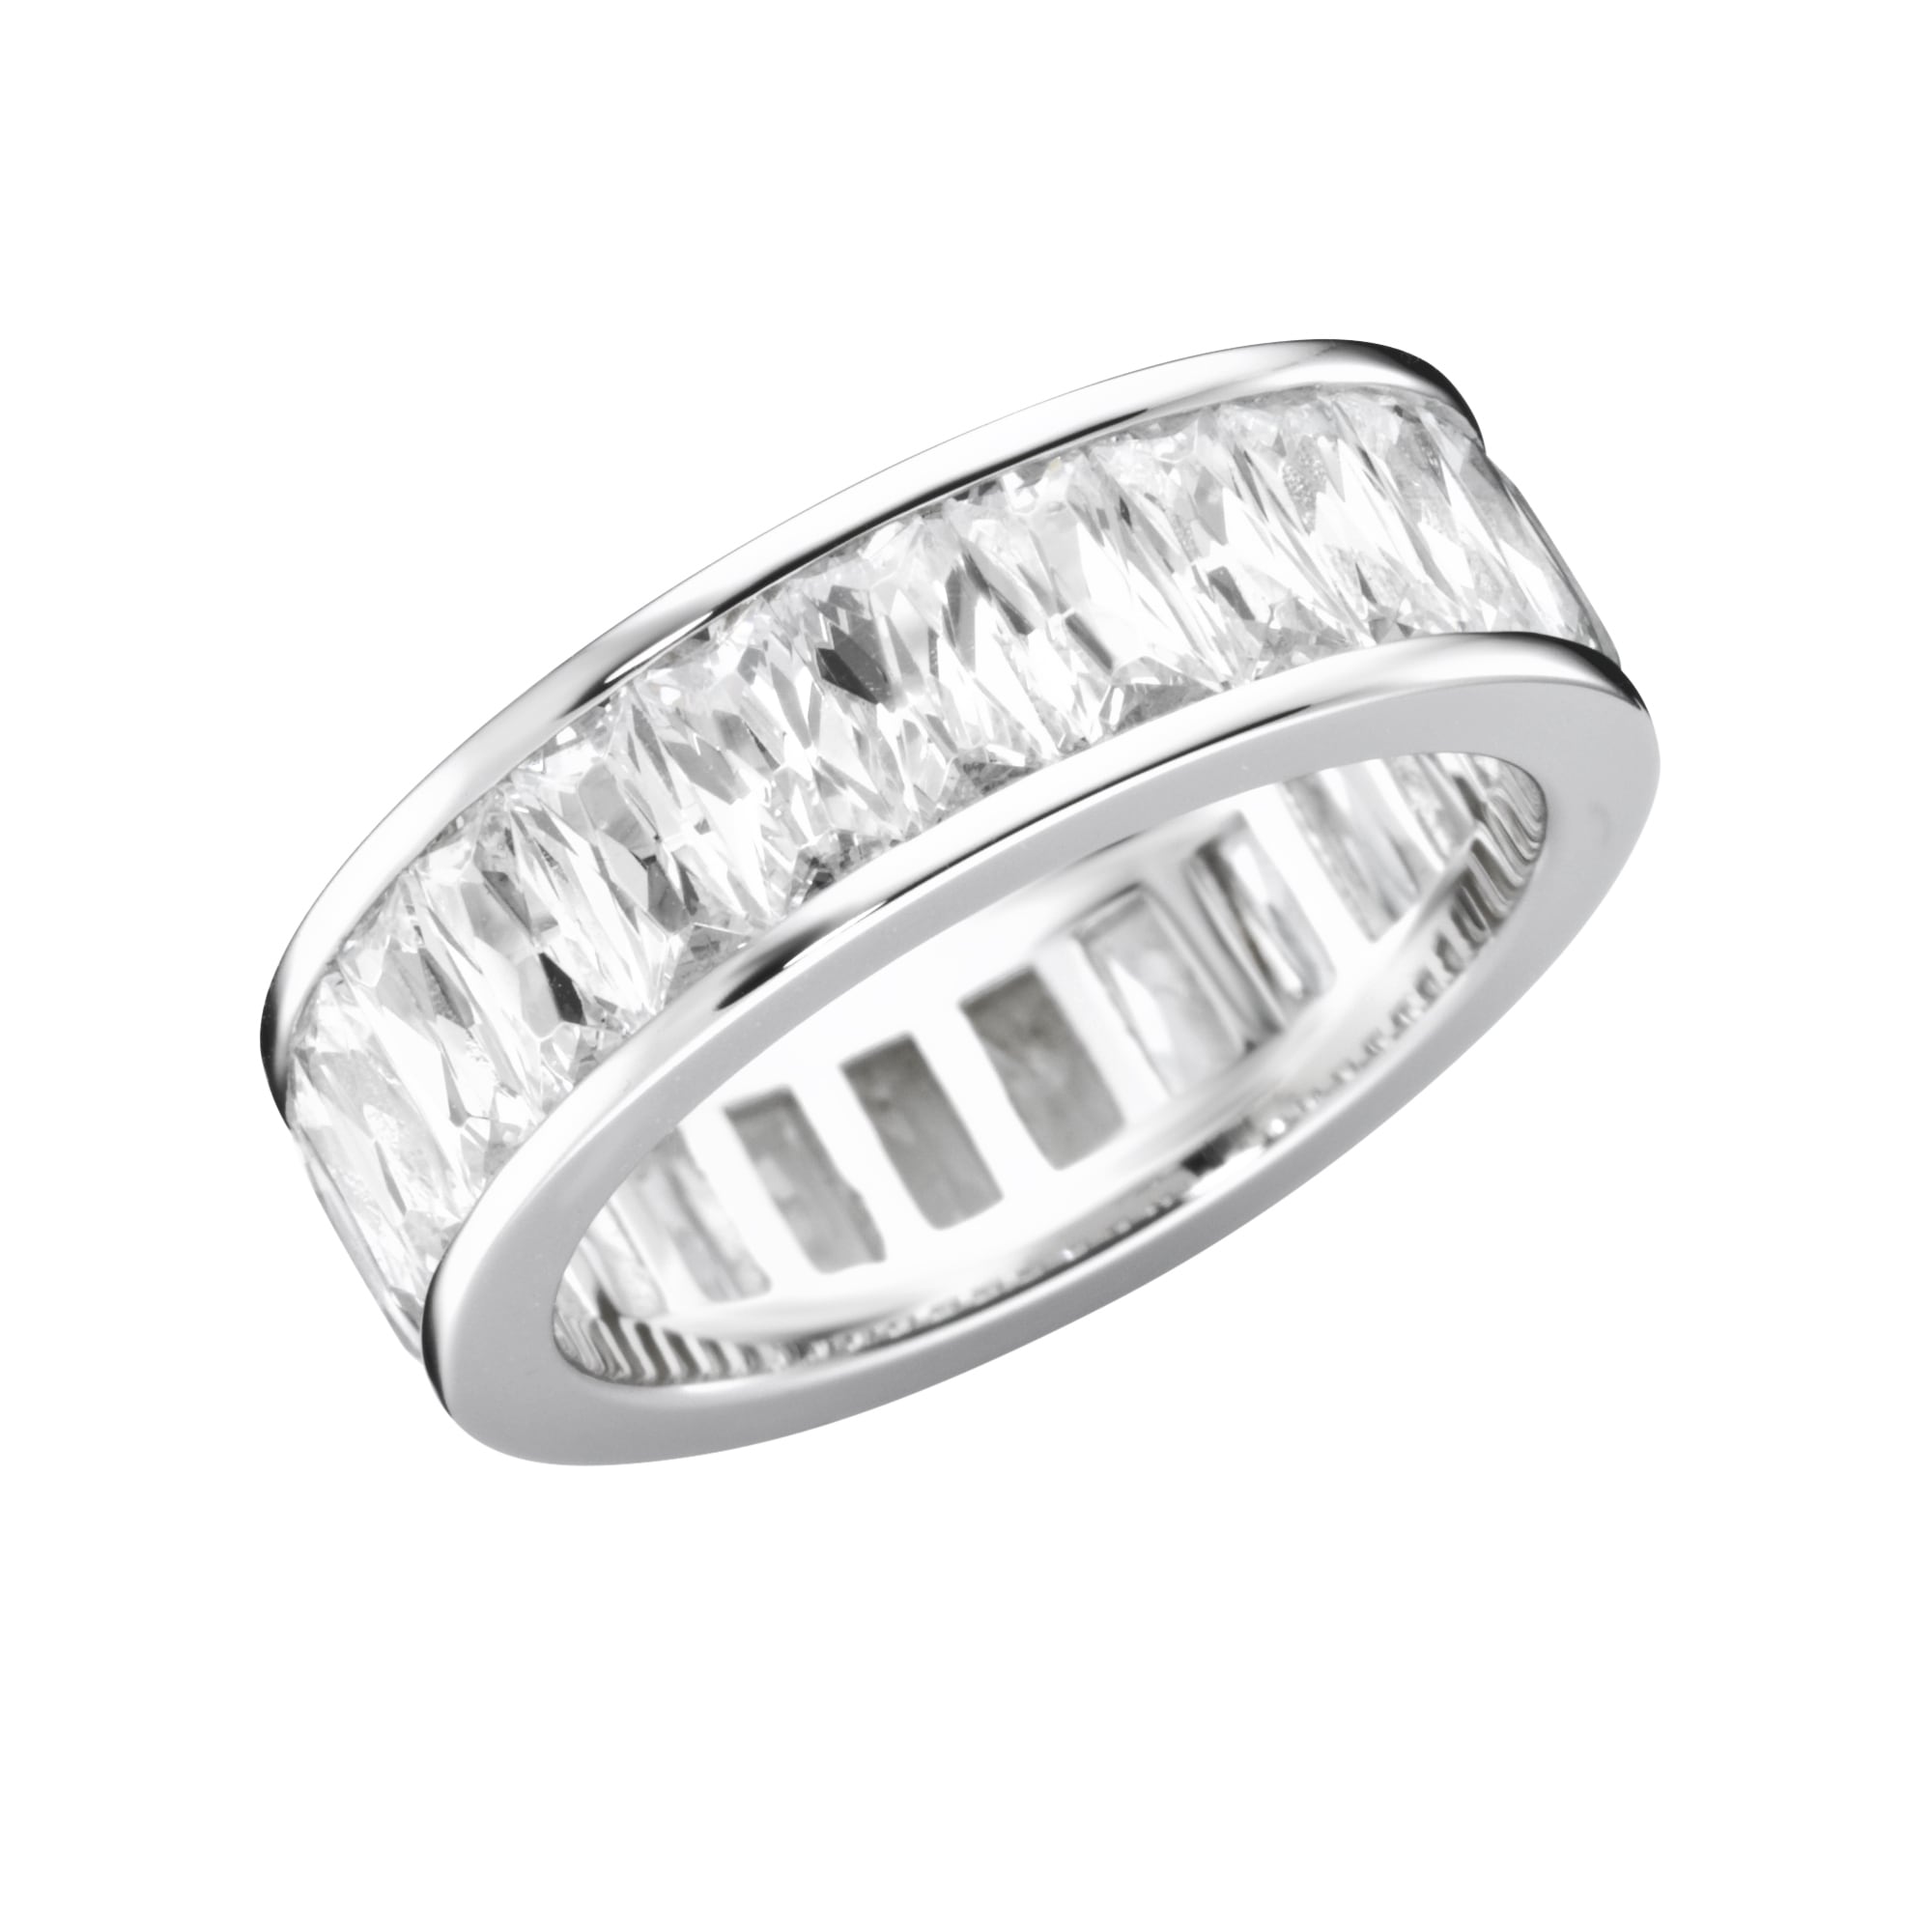 GIORGIO MARTELLO MILANO Silberring »Ring OTTOversand weißen Zirkonia, bei 925« Silber mit